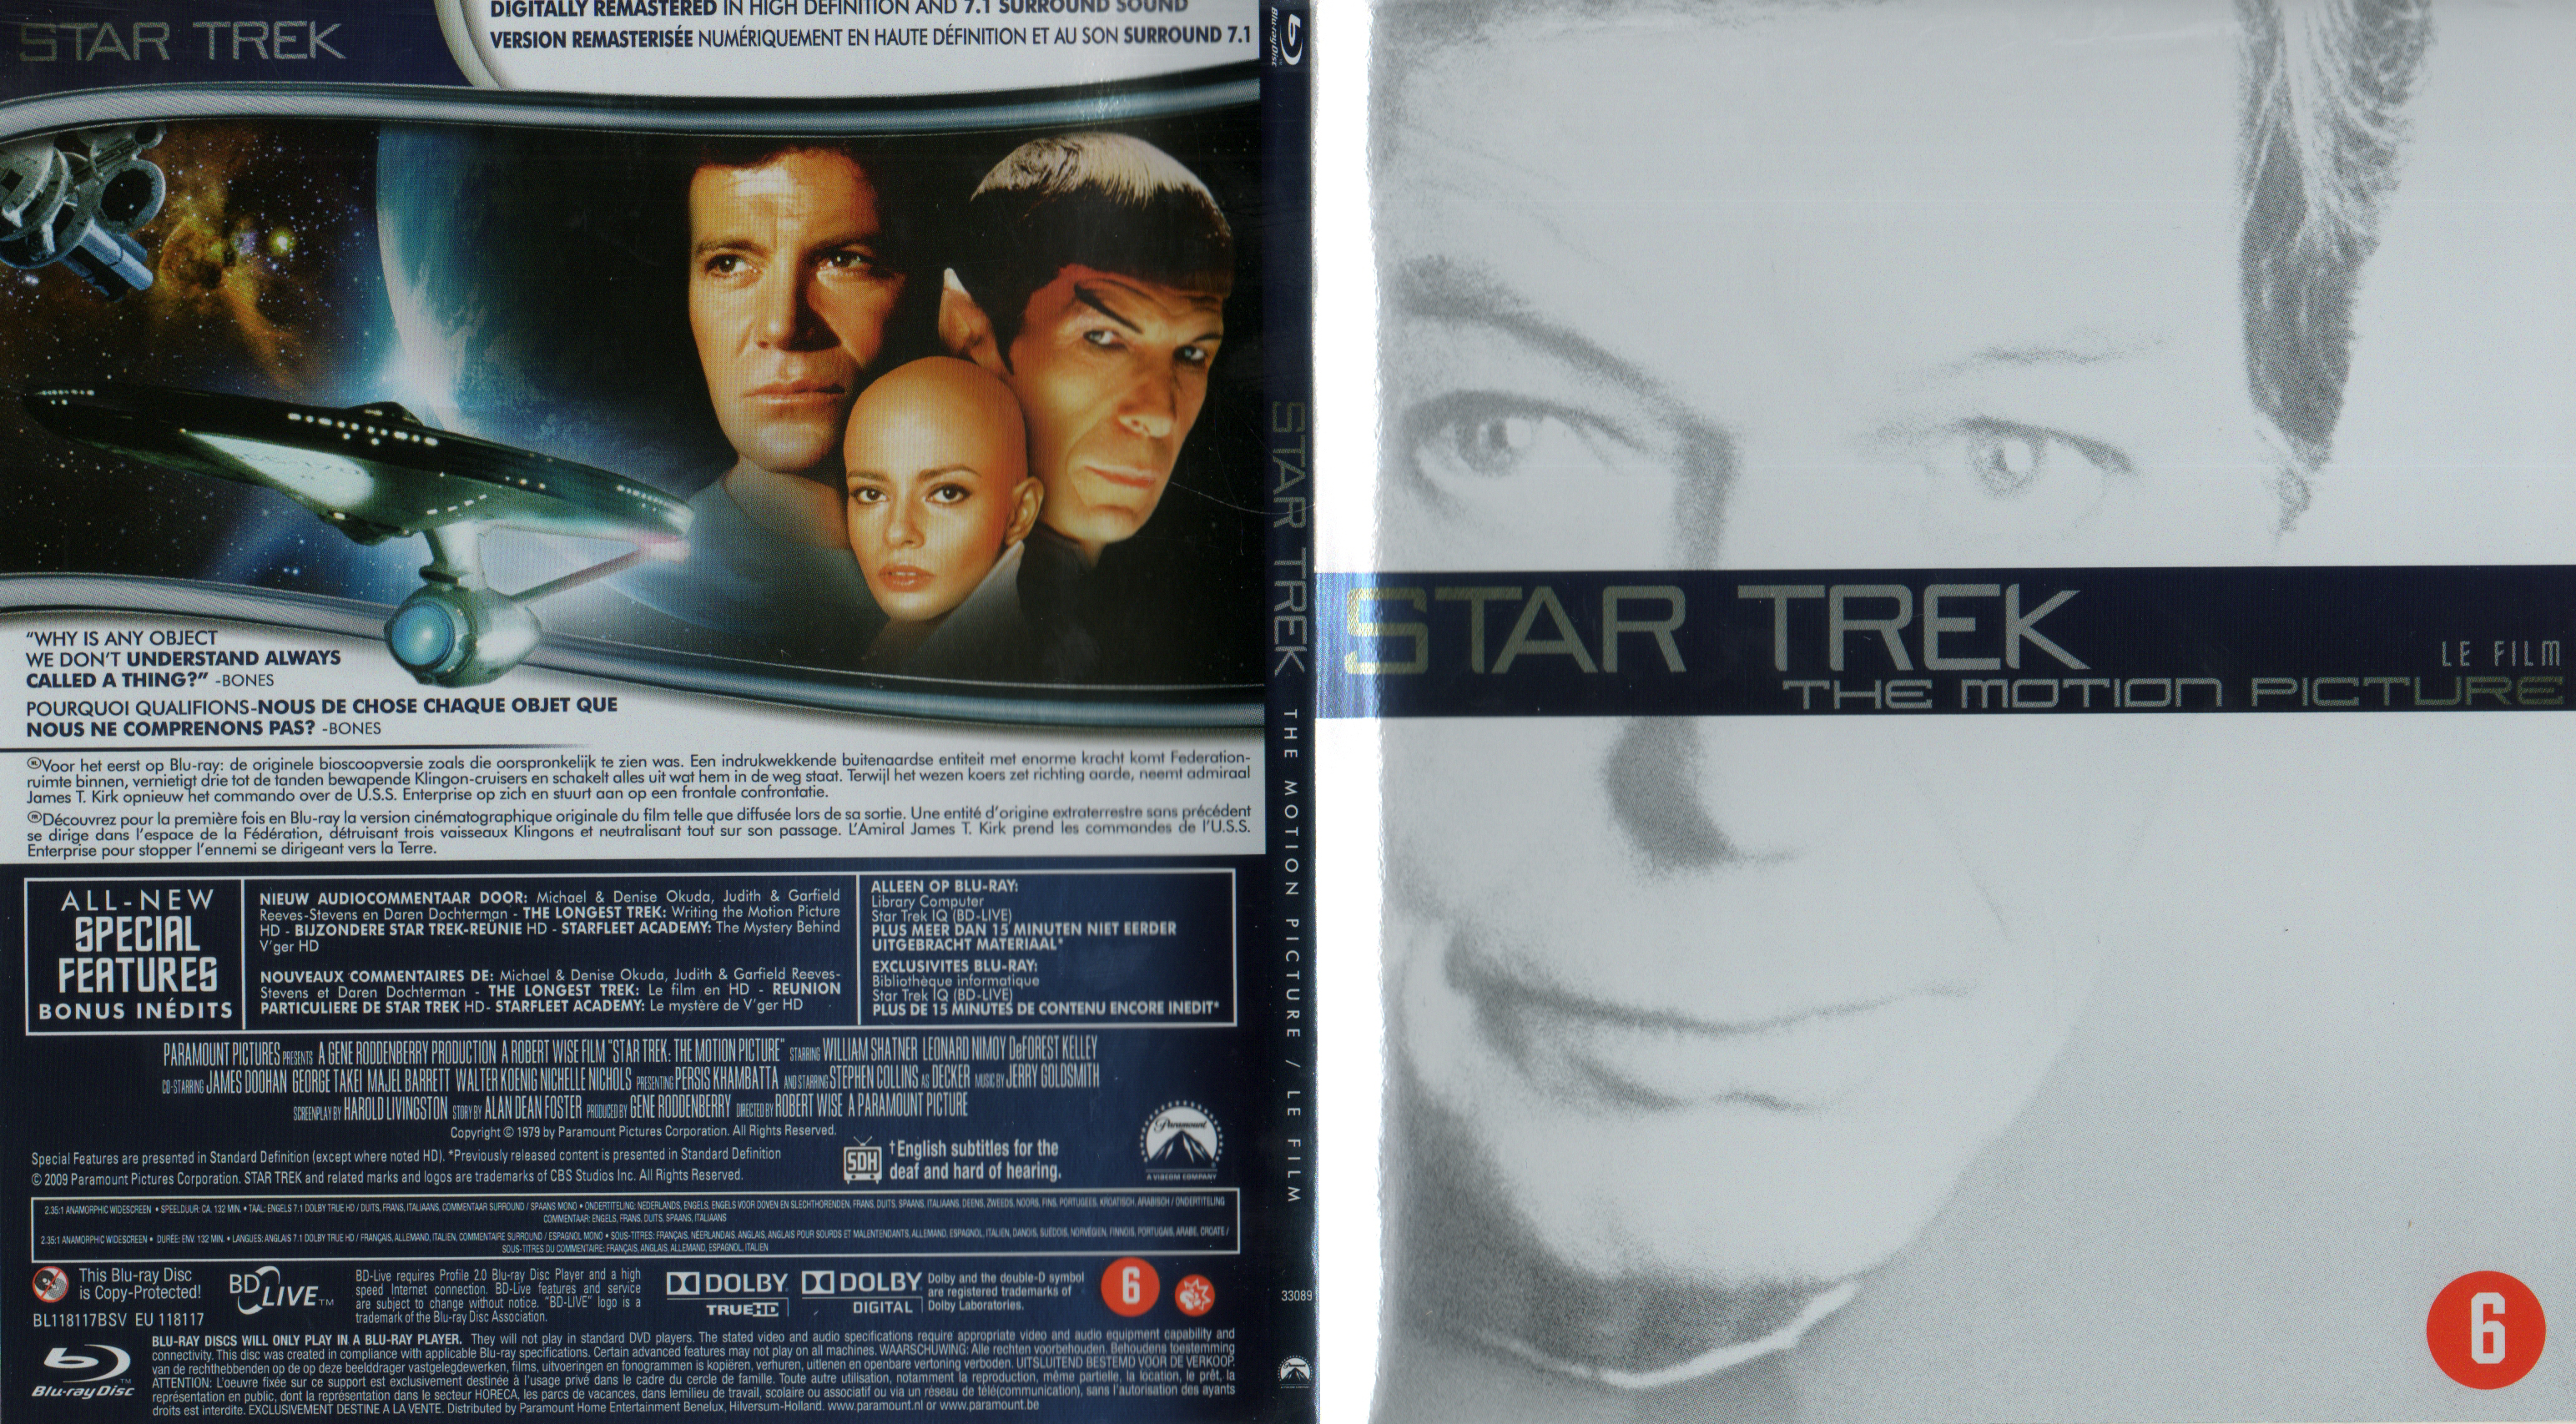 Jaquette DVD Star Trek le film (BLU-RAY) v2